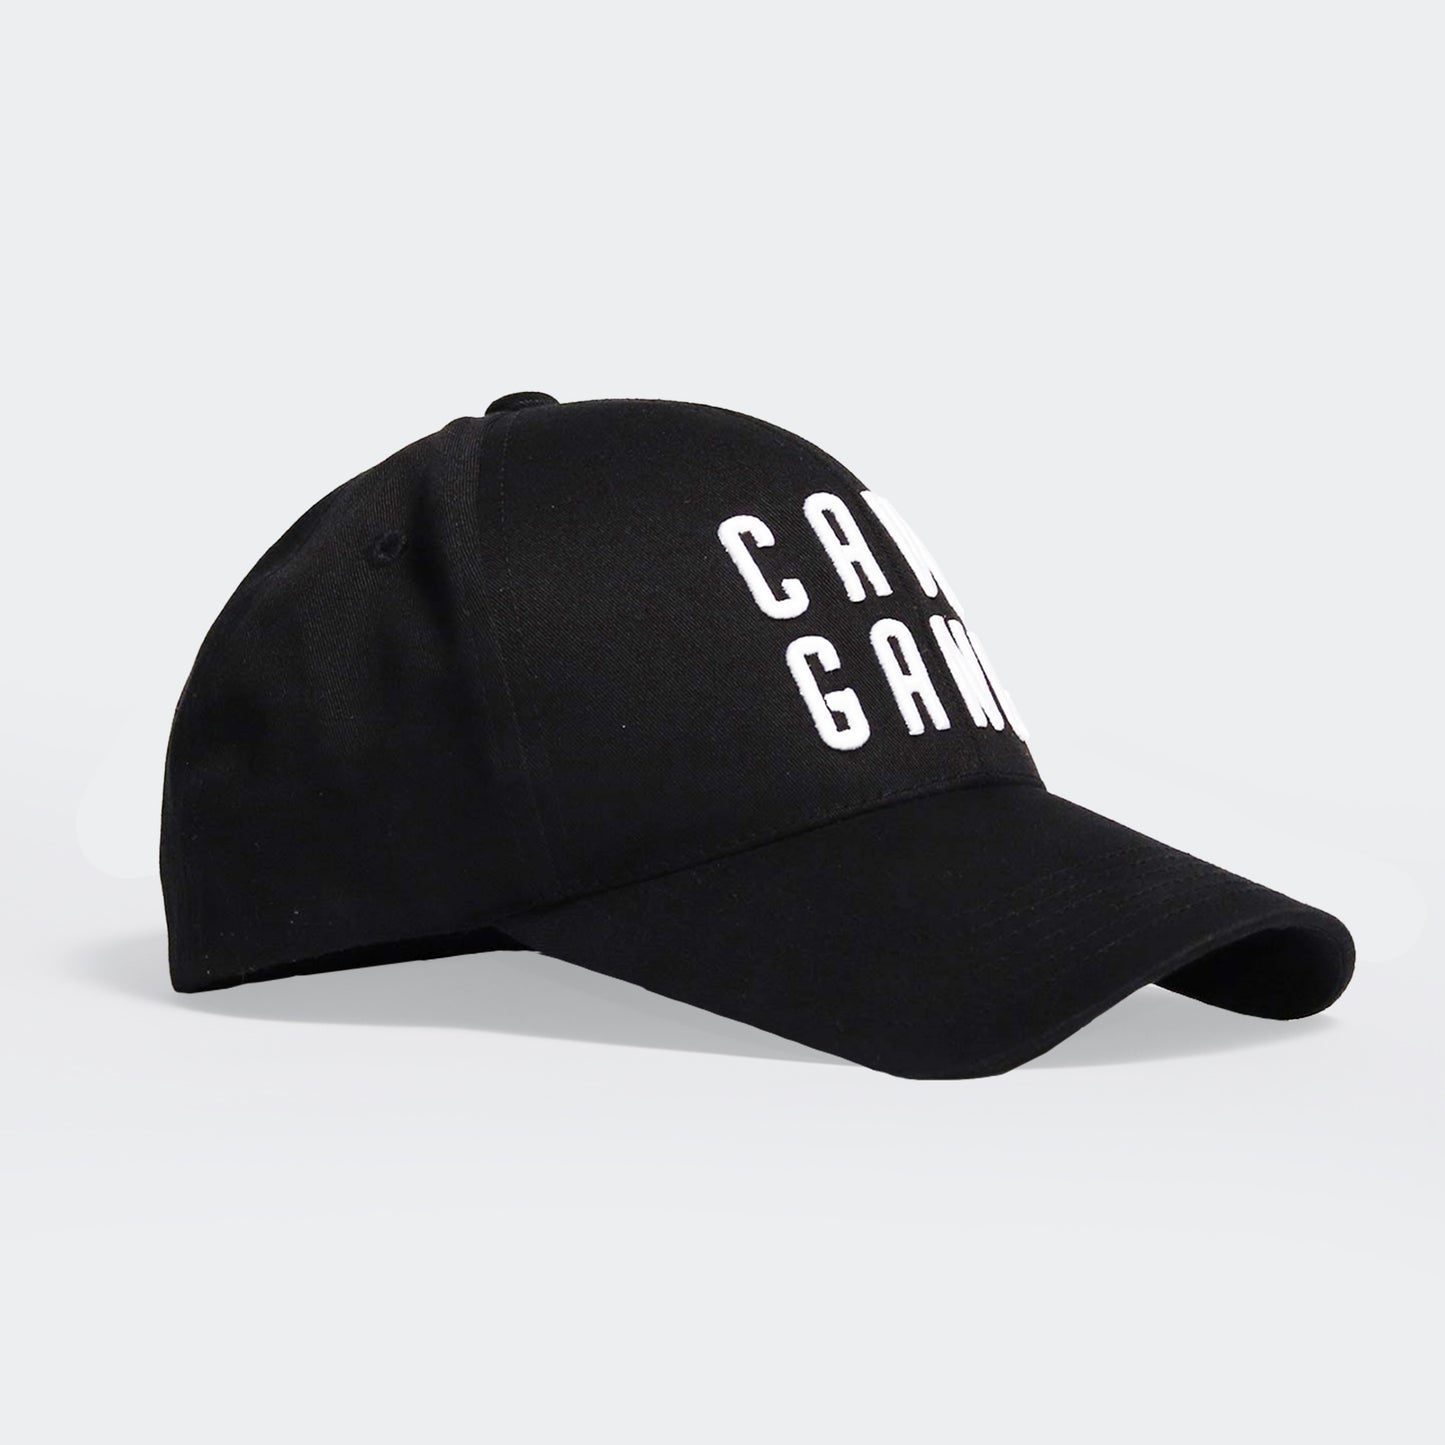 Concave Cavegang Caps - Black/White